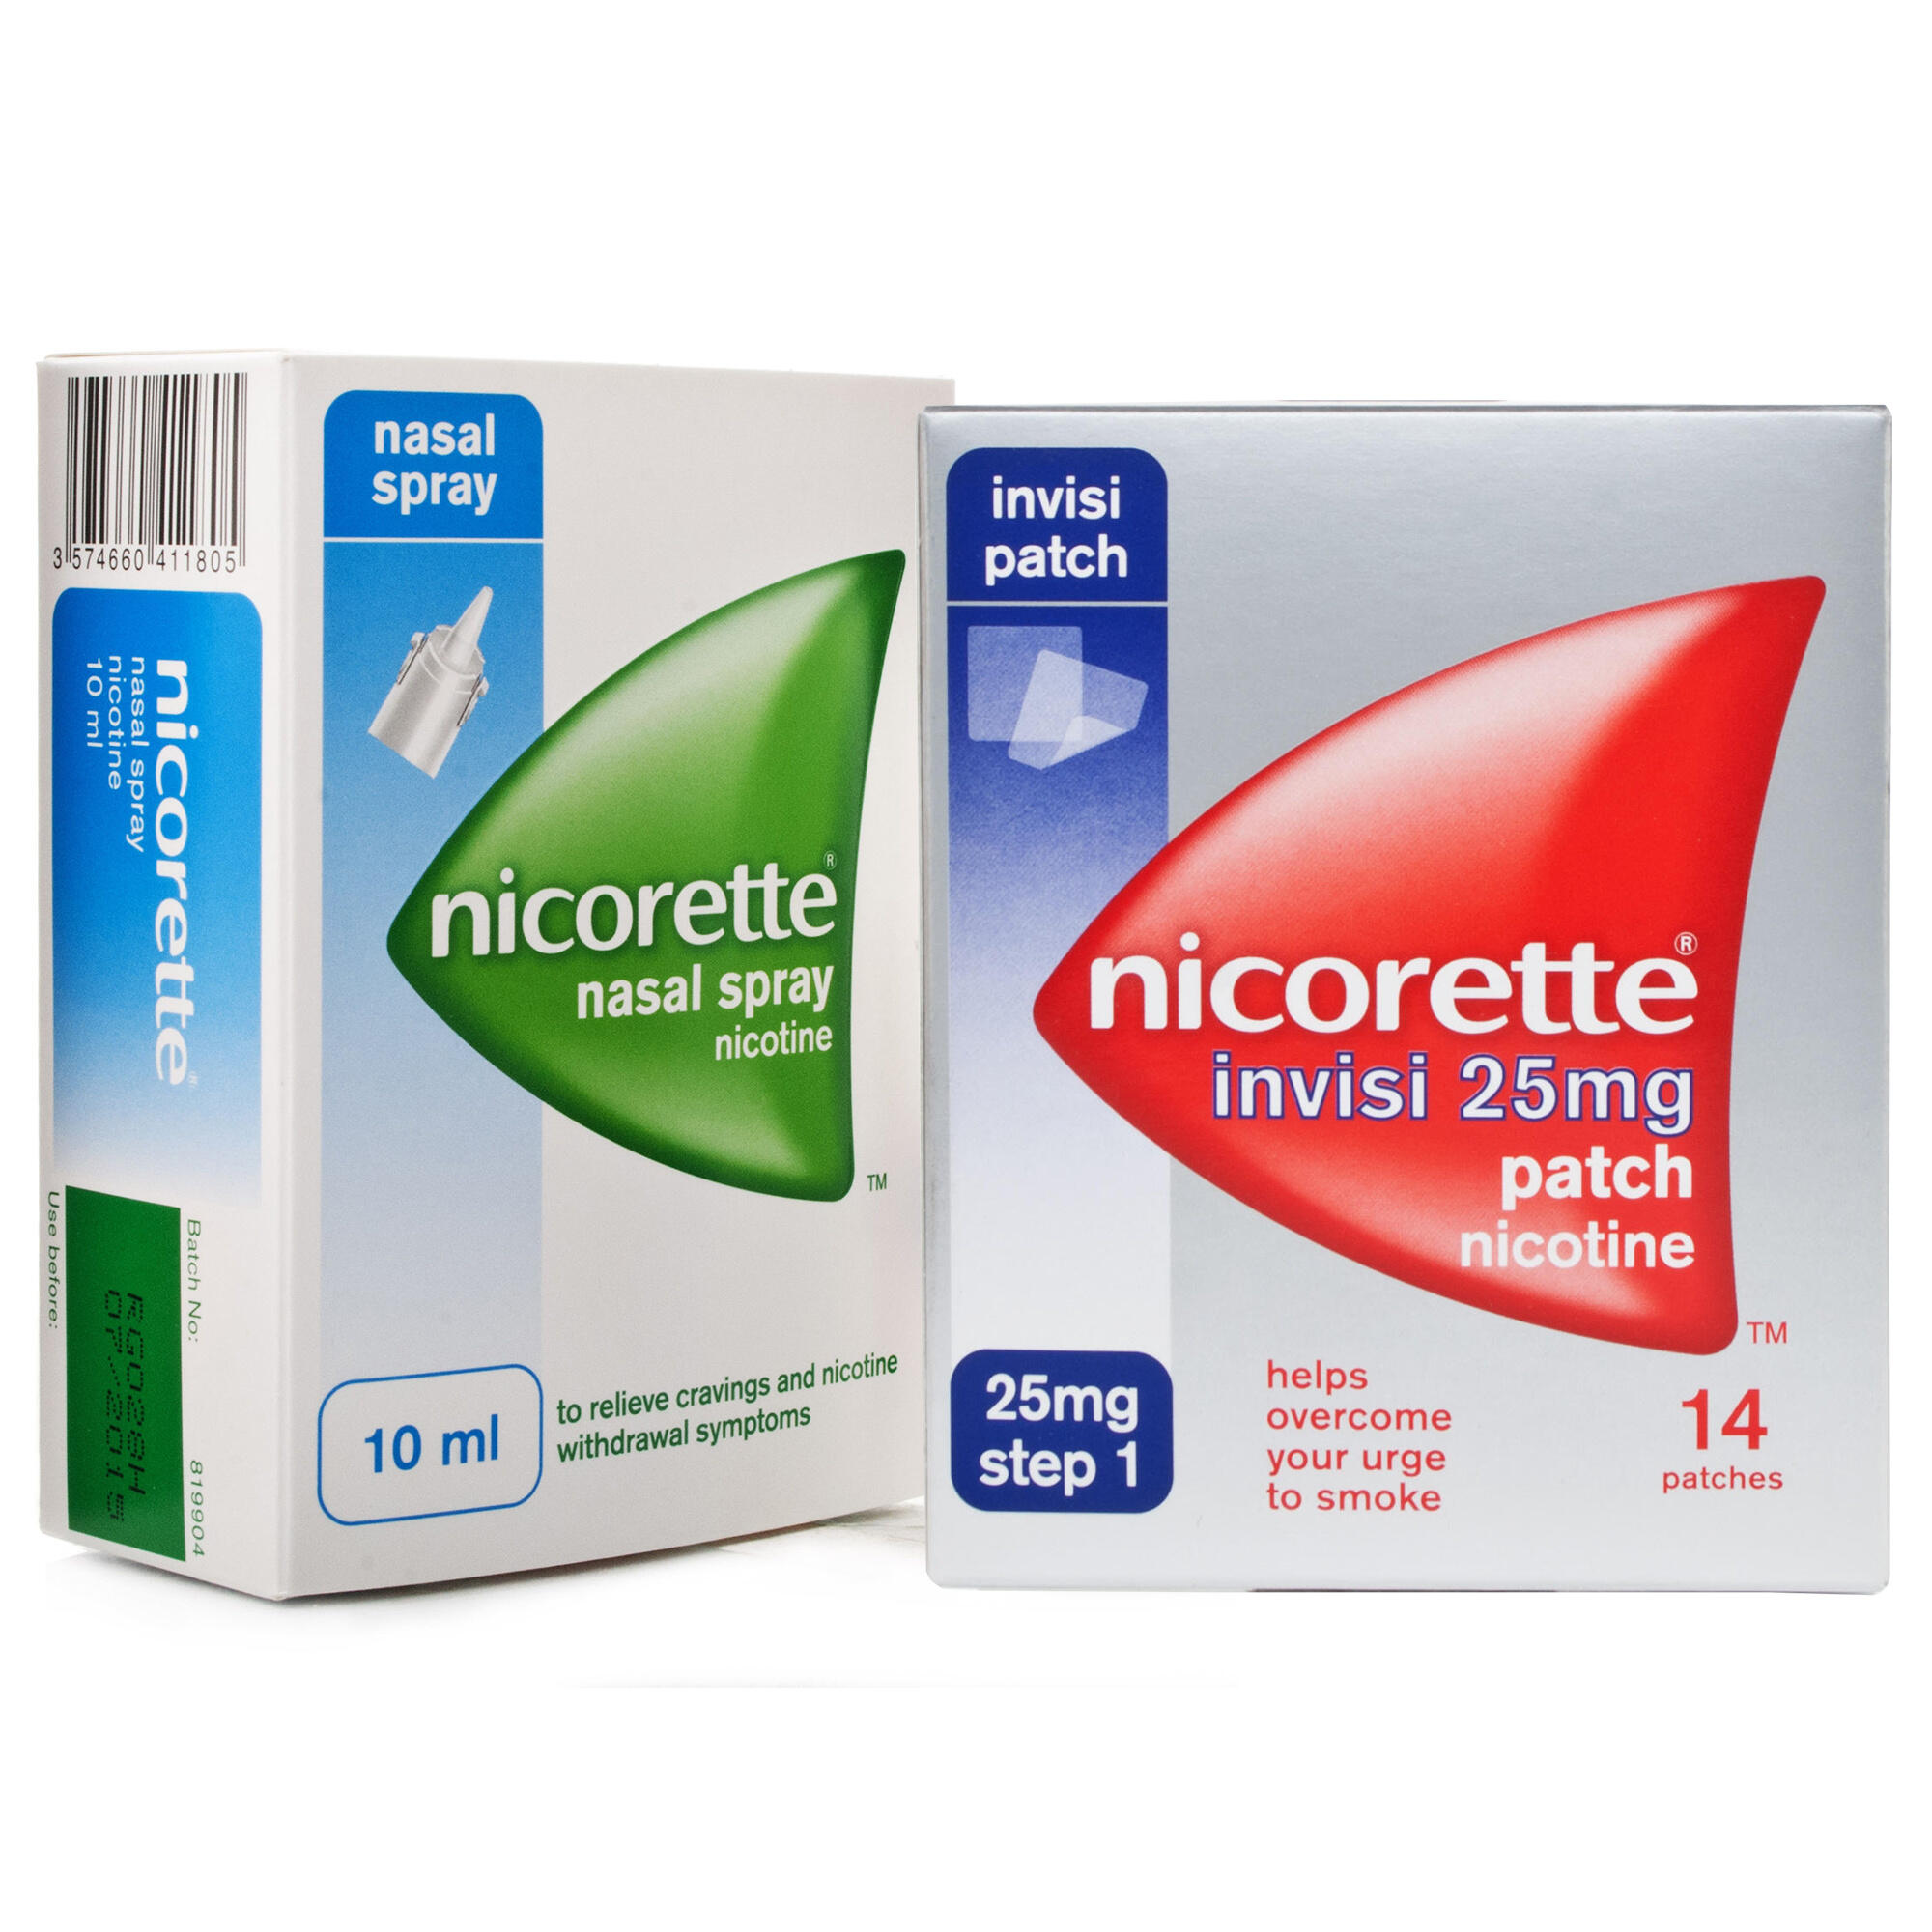 nicorette-invisi-25mg-patch-nicorette-nasal-spray-chemist-direct